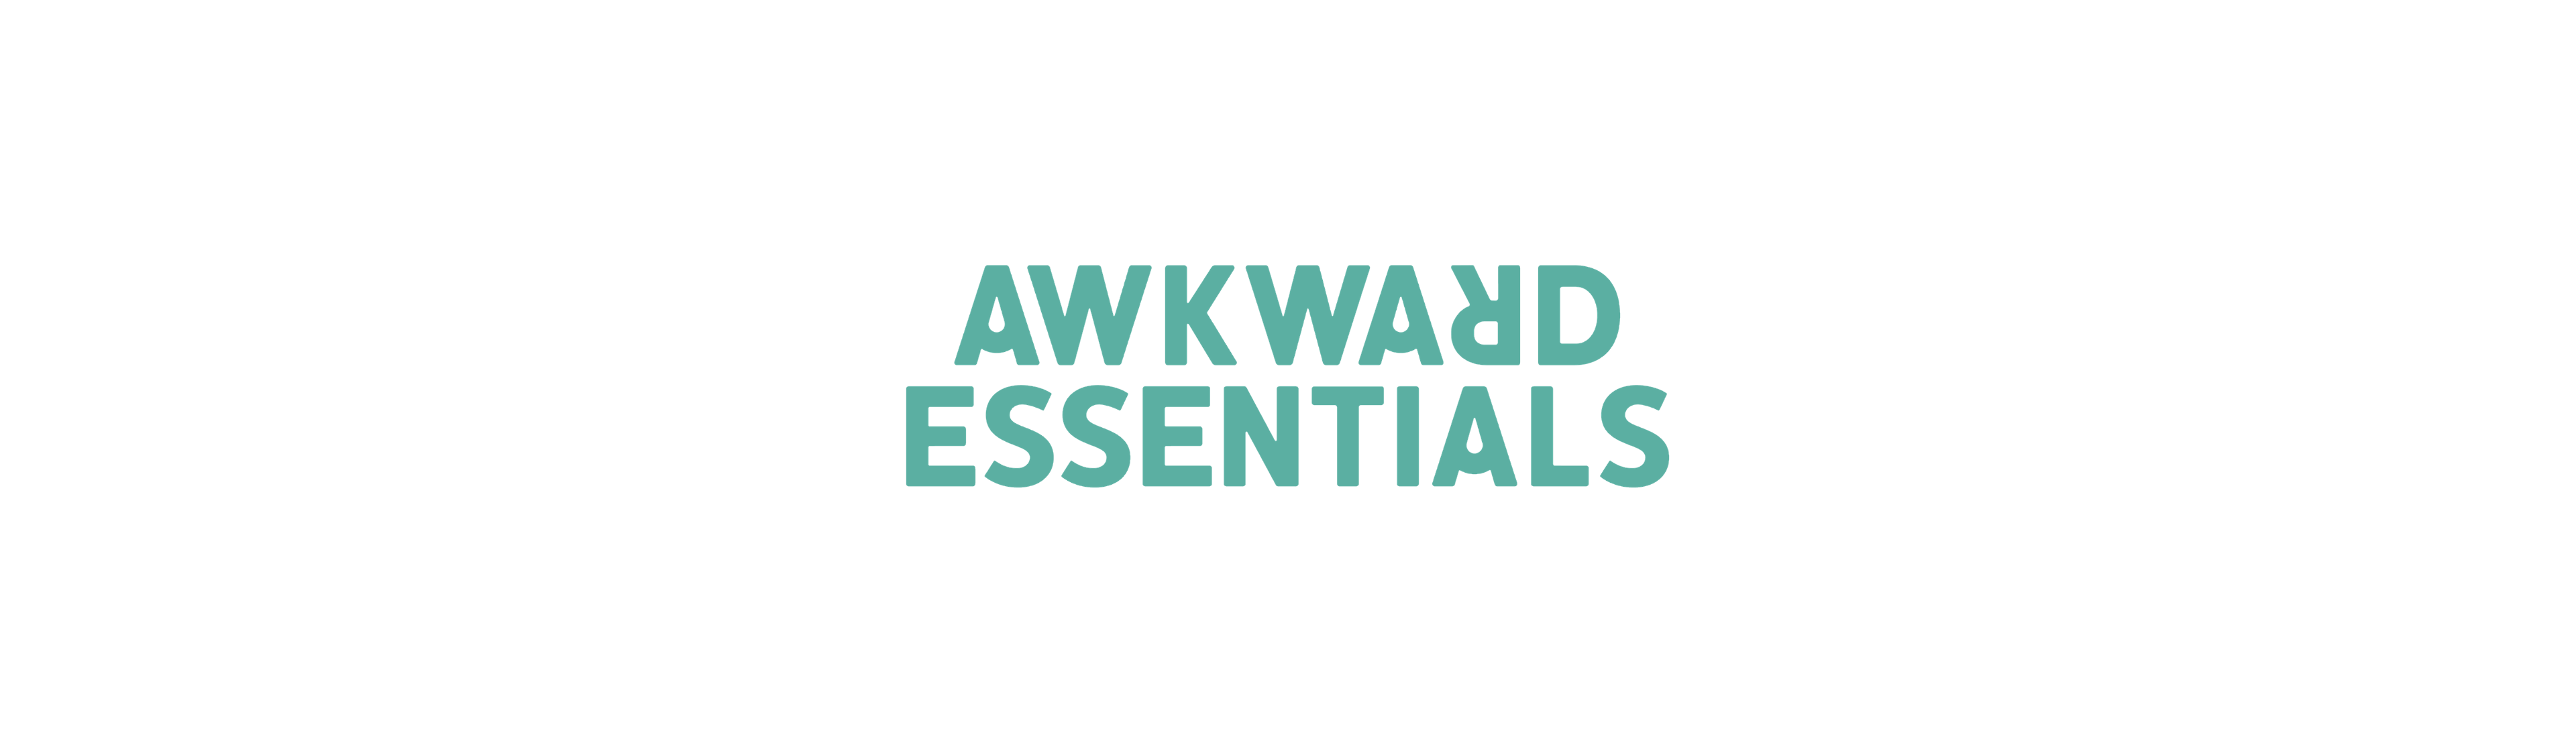 awkwardessentials